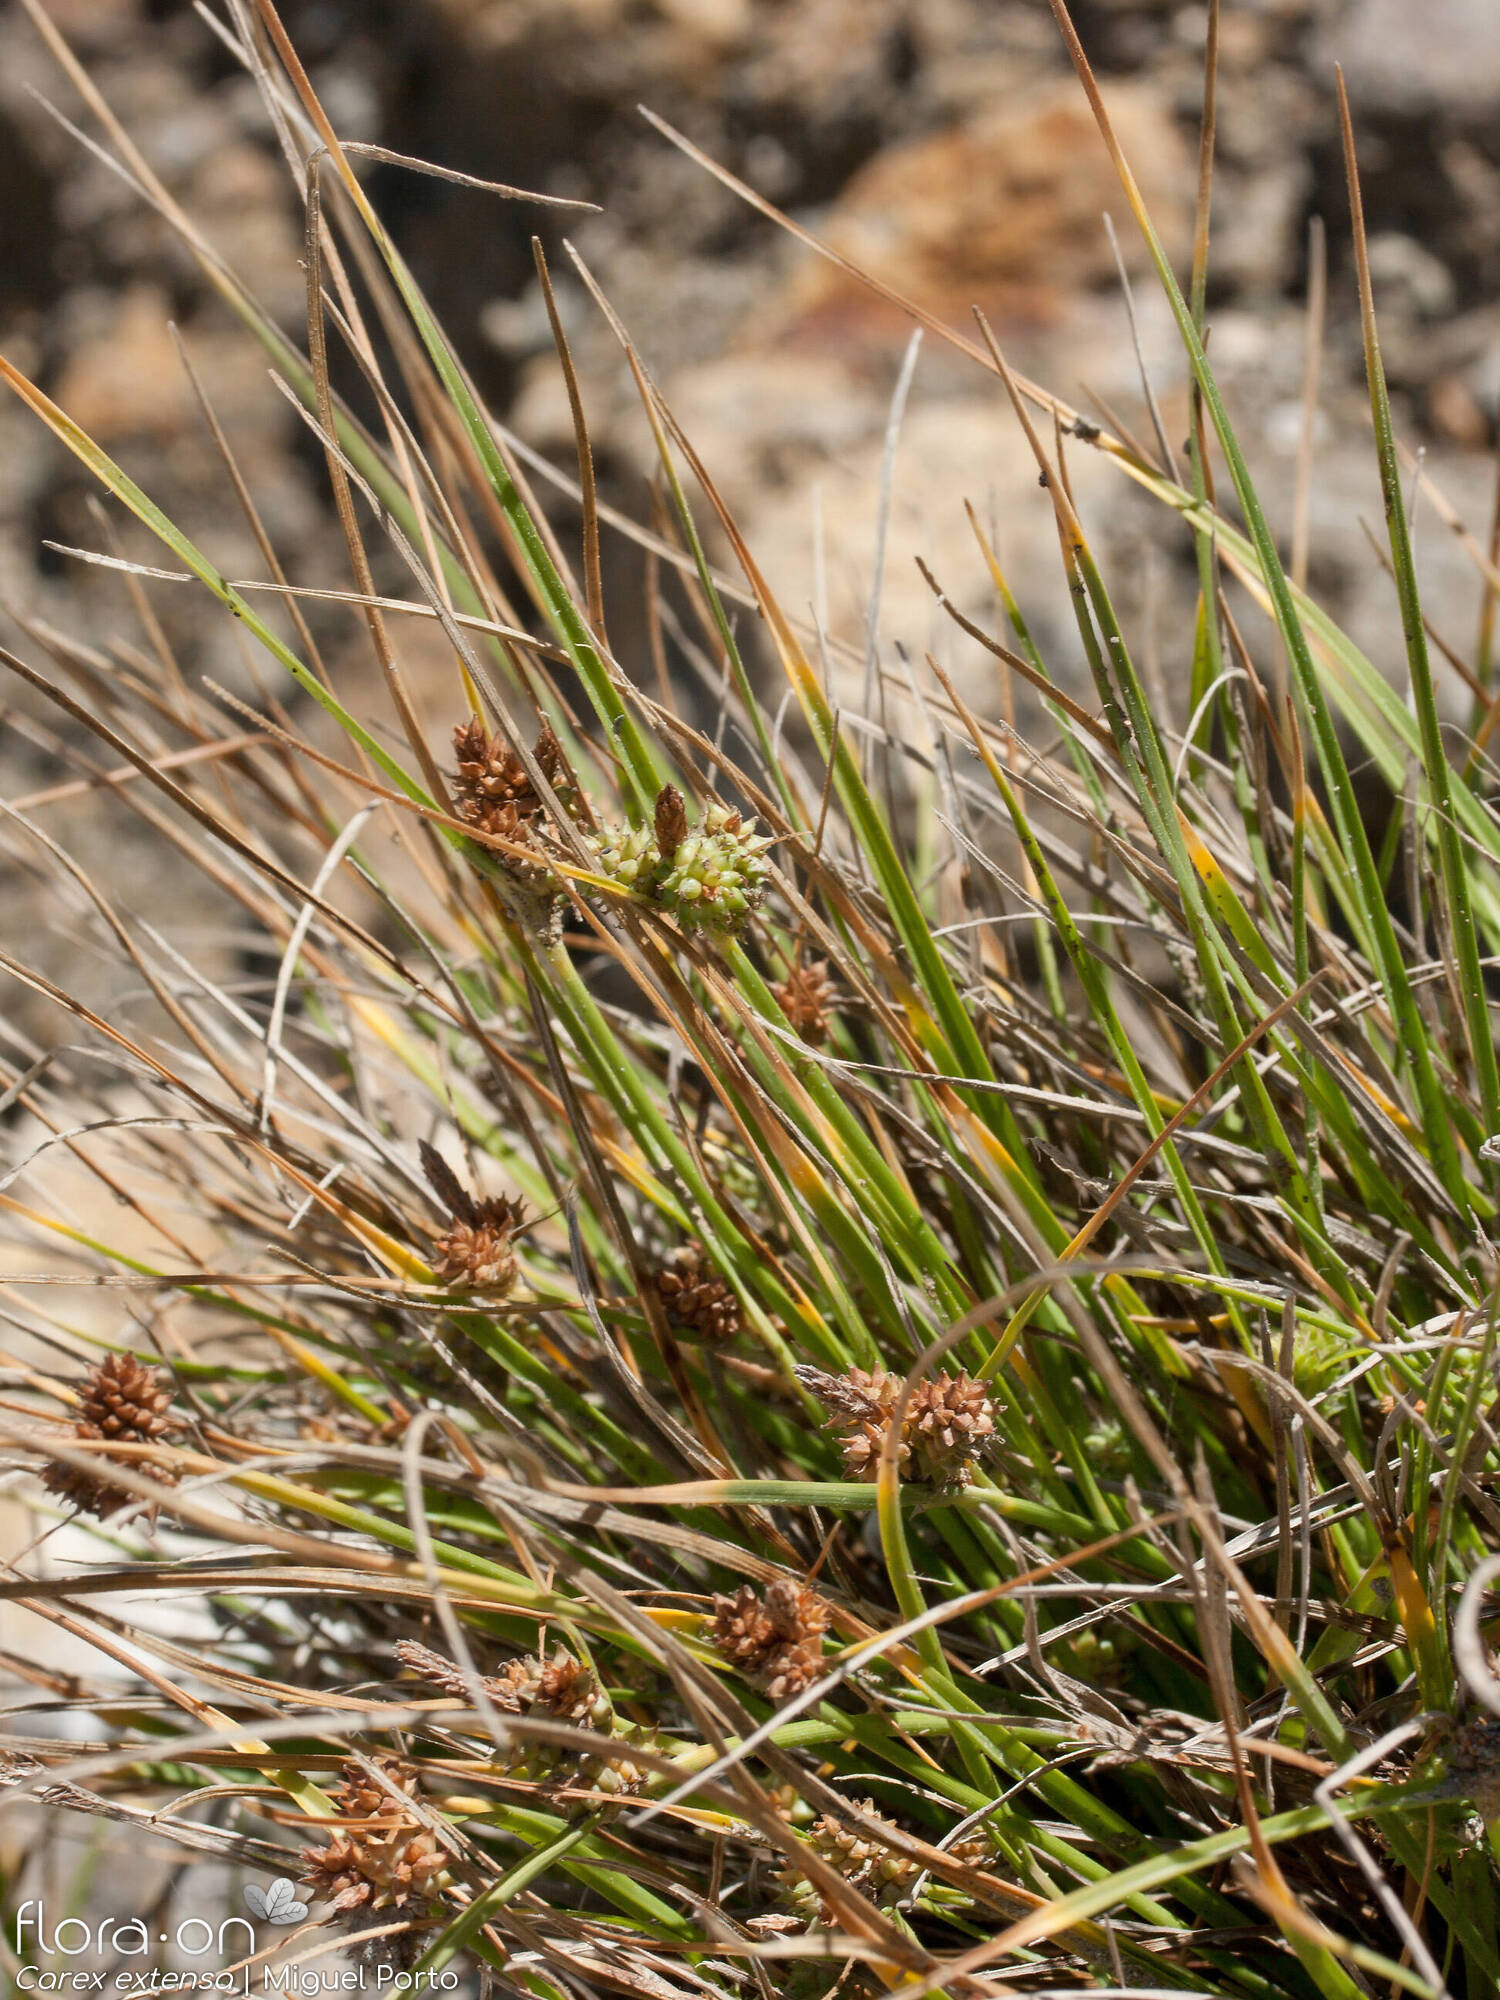 Carex extensa - Hábito | Miguel Porto; CC BY-NC 4.0